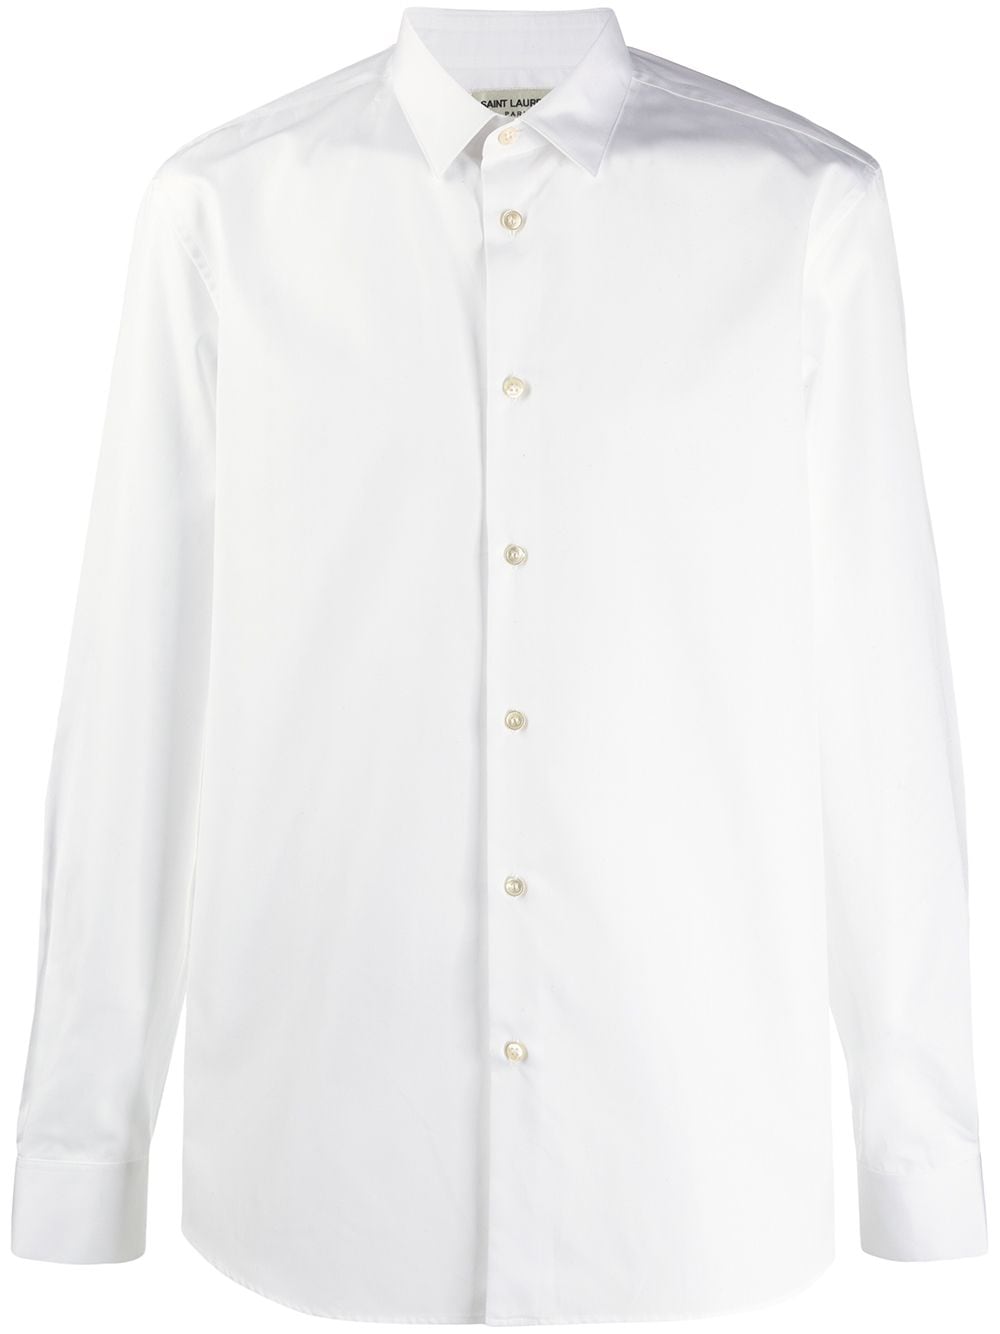 White shirt featuring a classic collar